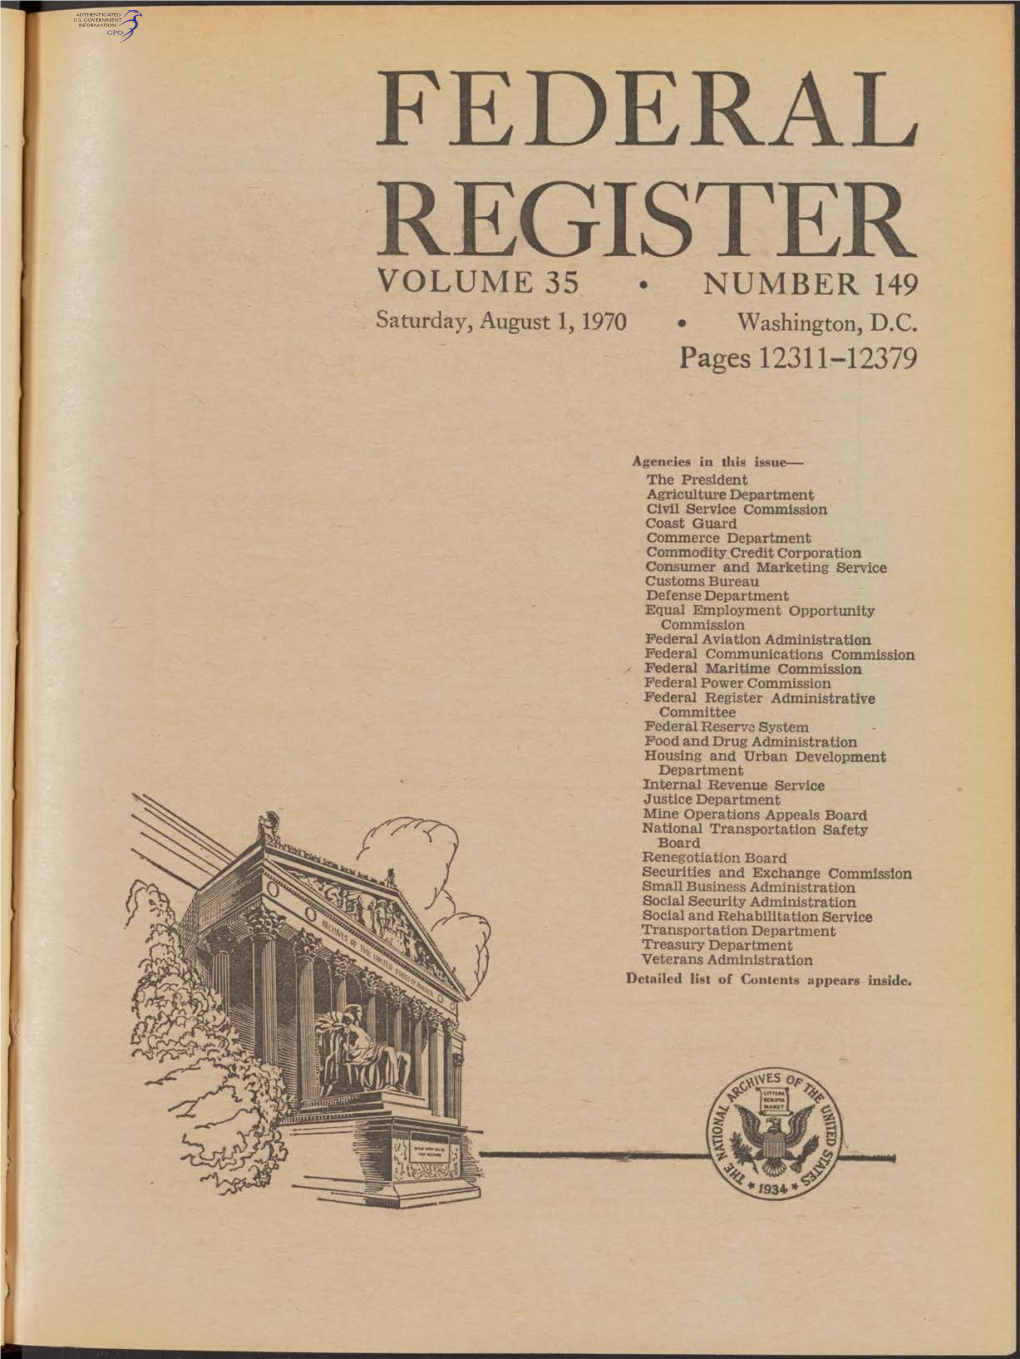 FEDERAL REGISTER VOLUME 35 NUMBER 149 Saturday, August 1,1970 • Washington, D.C